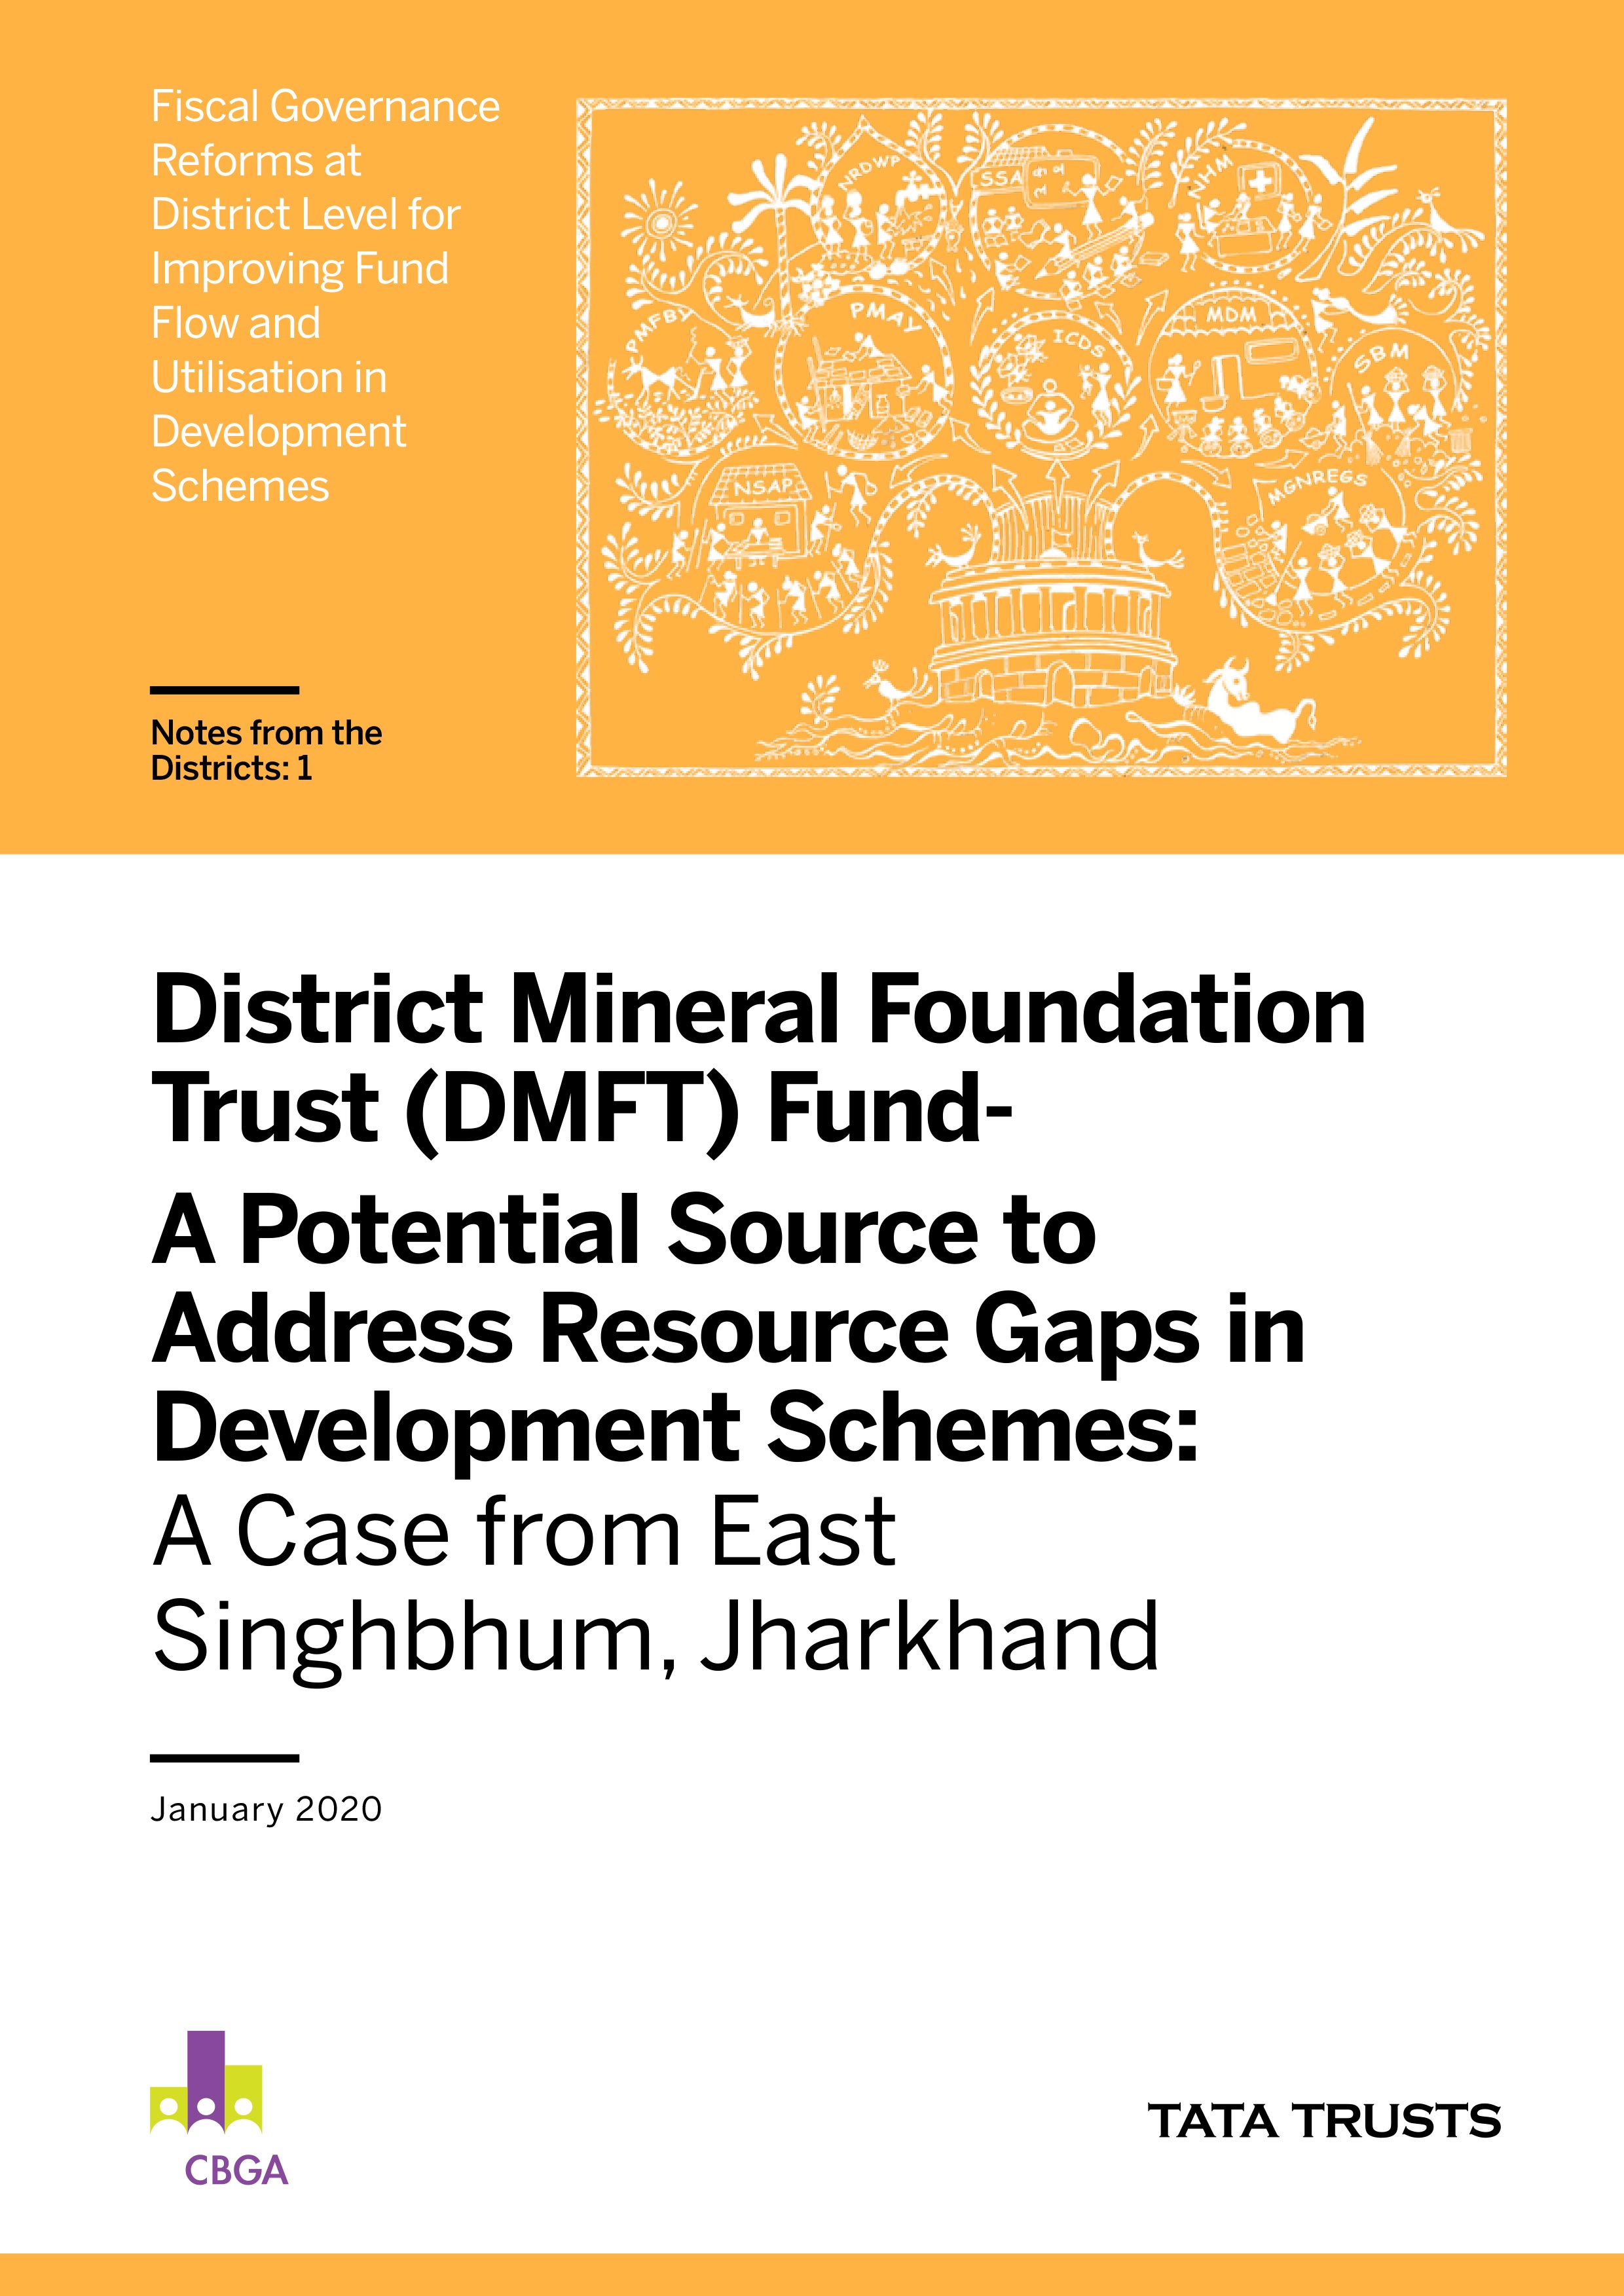 District Mineral Foundation Trust (DMFT) Fund- Case of East Singhbhum